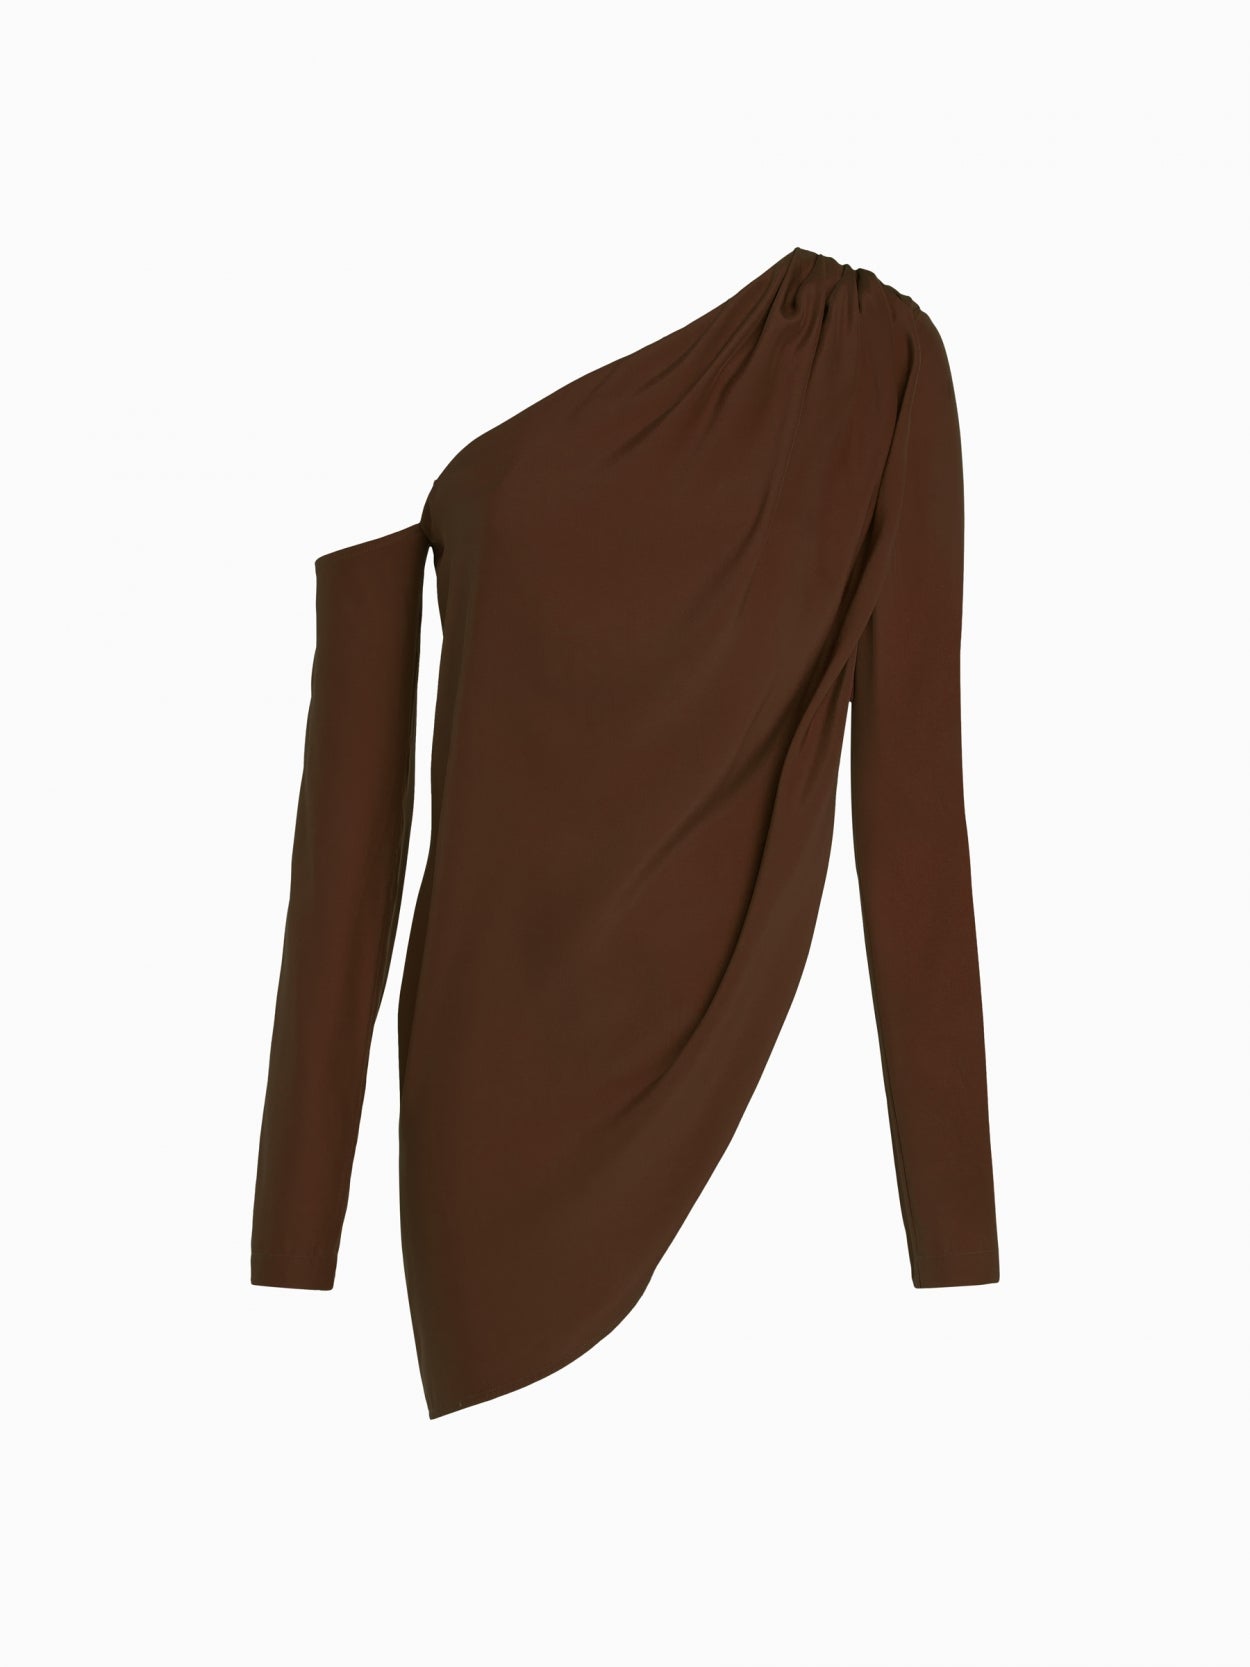 front packshot of a brown asymmetric long sleeve silk top